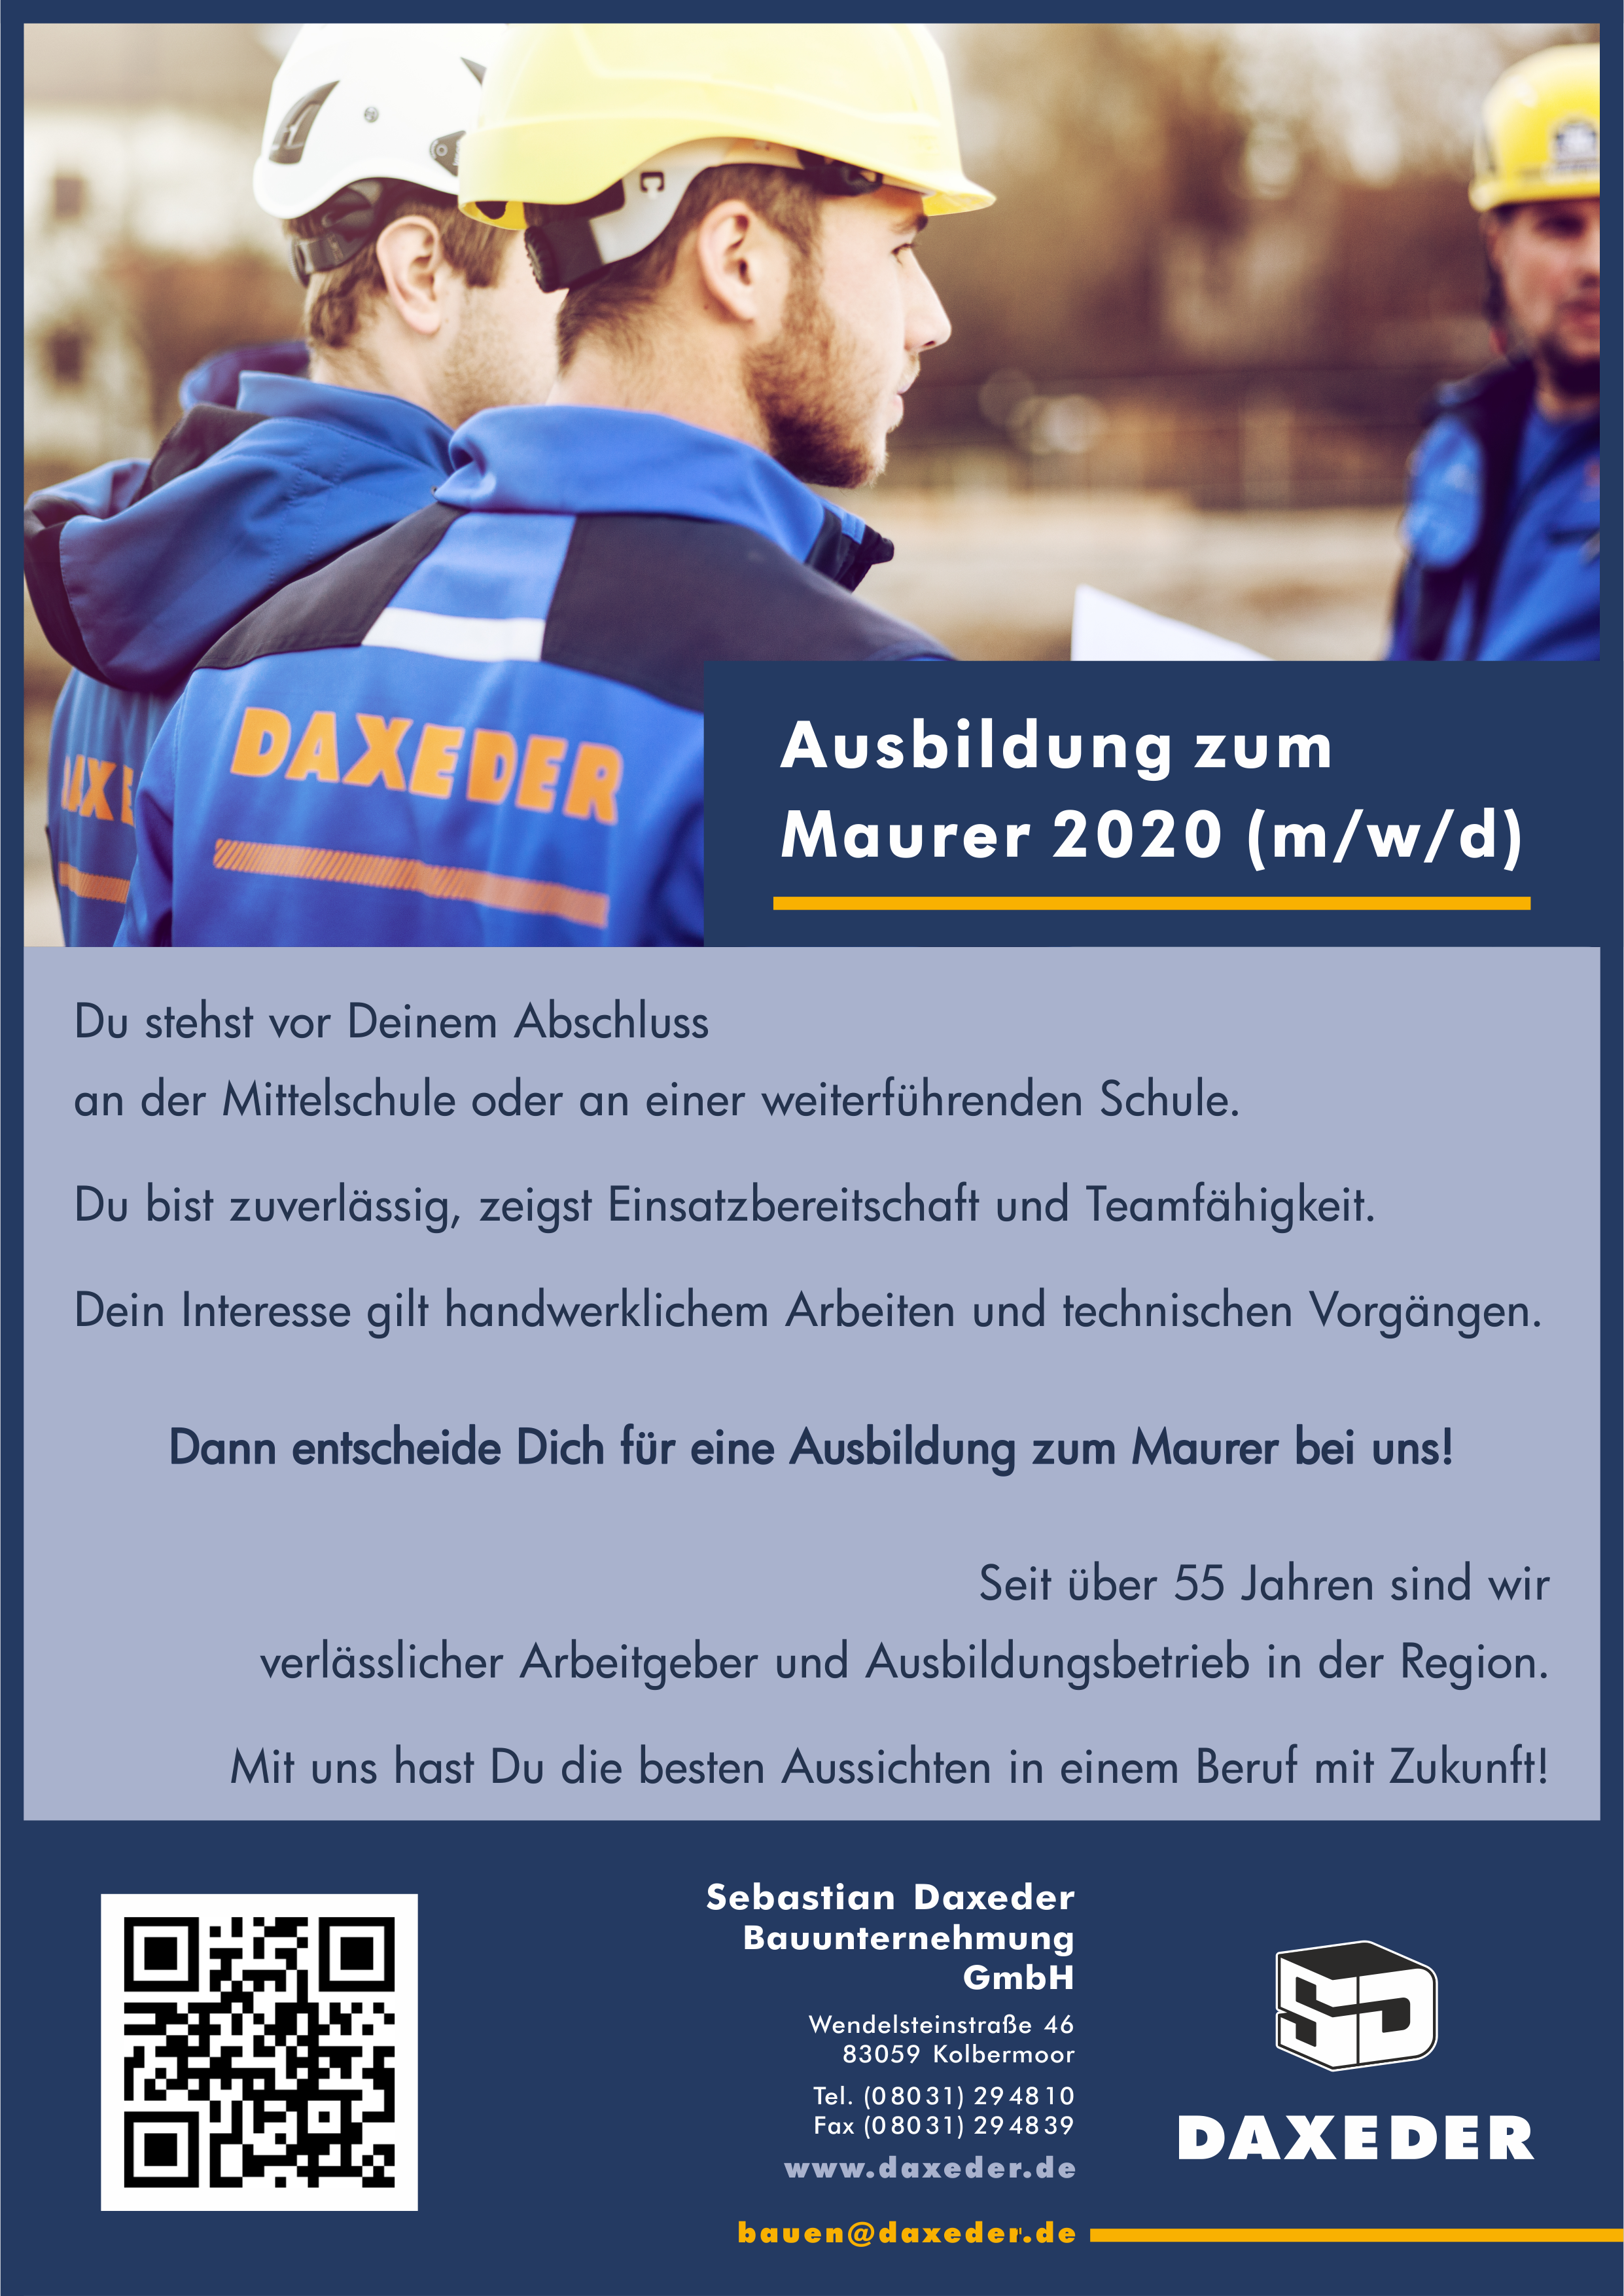 Sebastian Daxeder Bauunternehmung GmbH, Ausbildung Maurer 2020